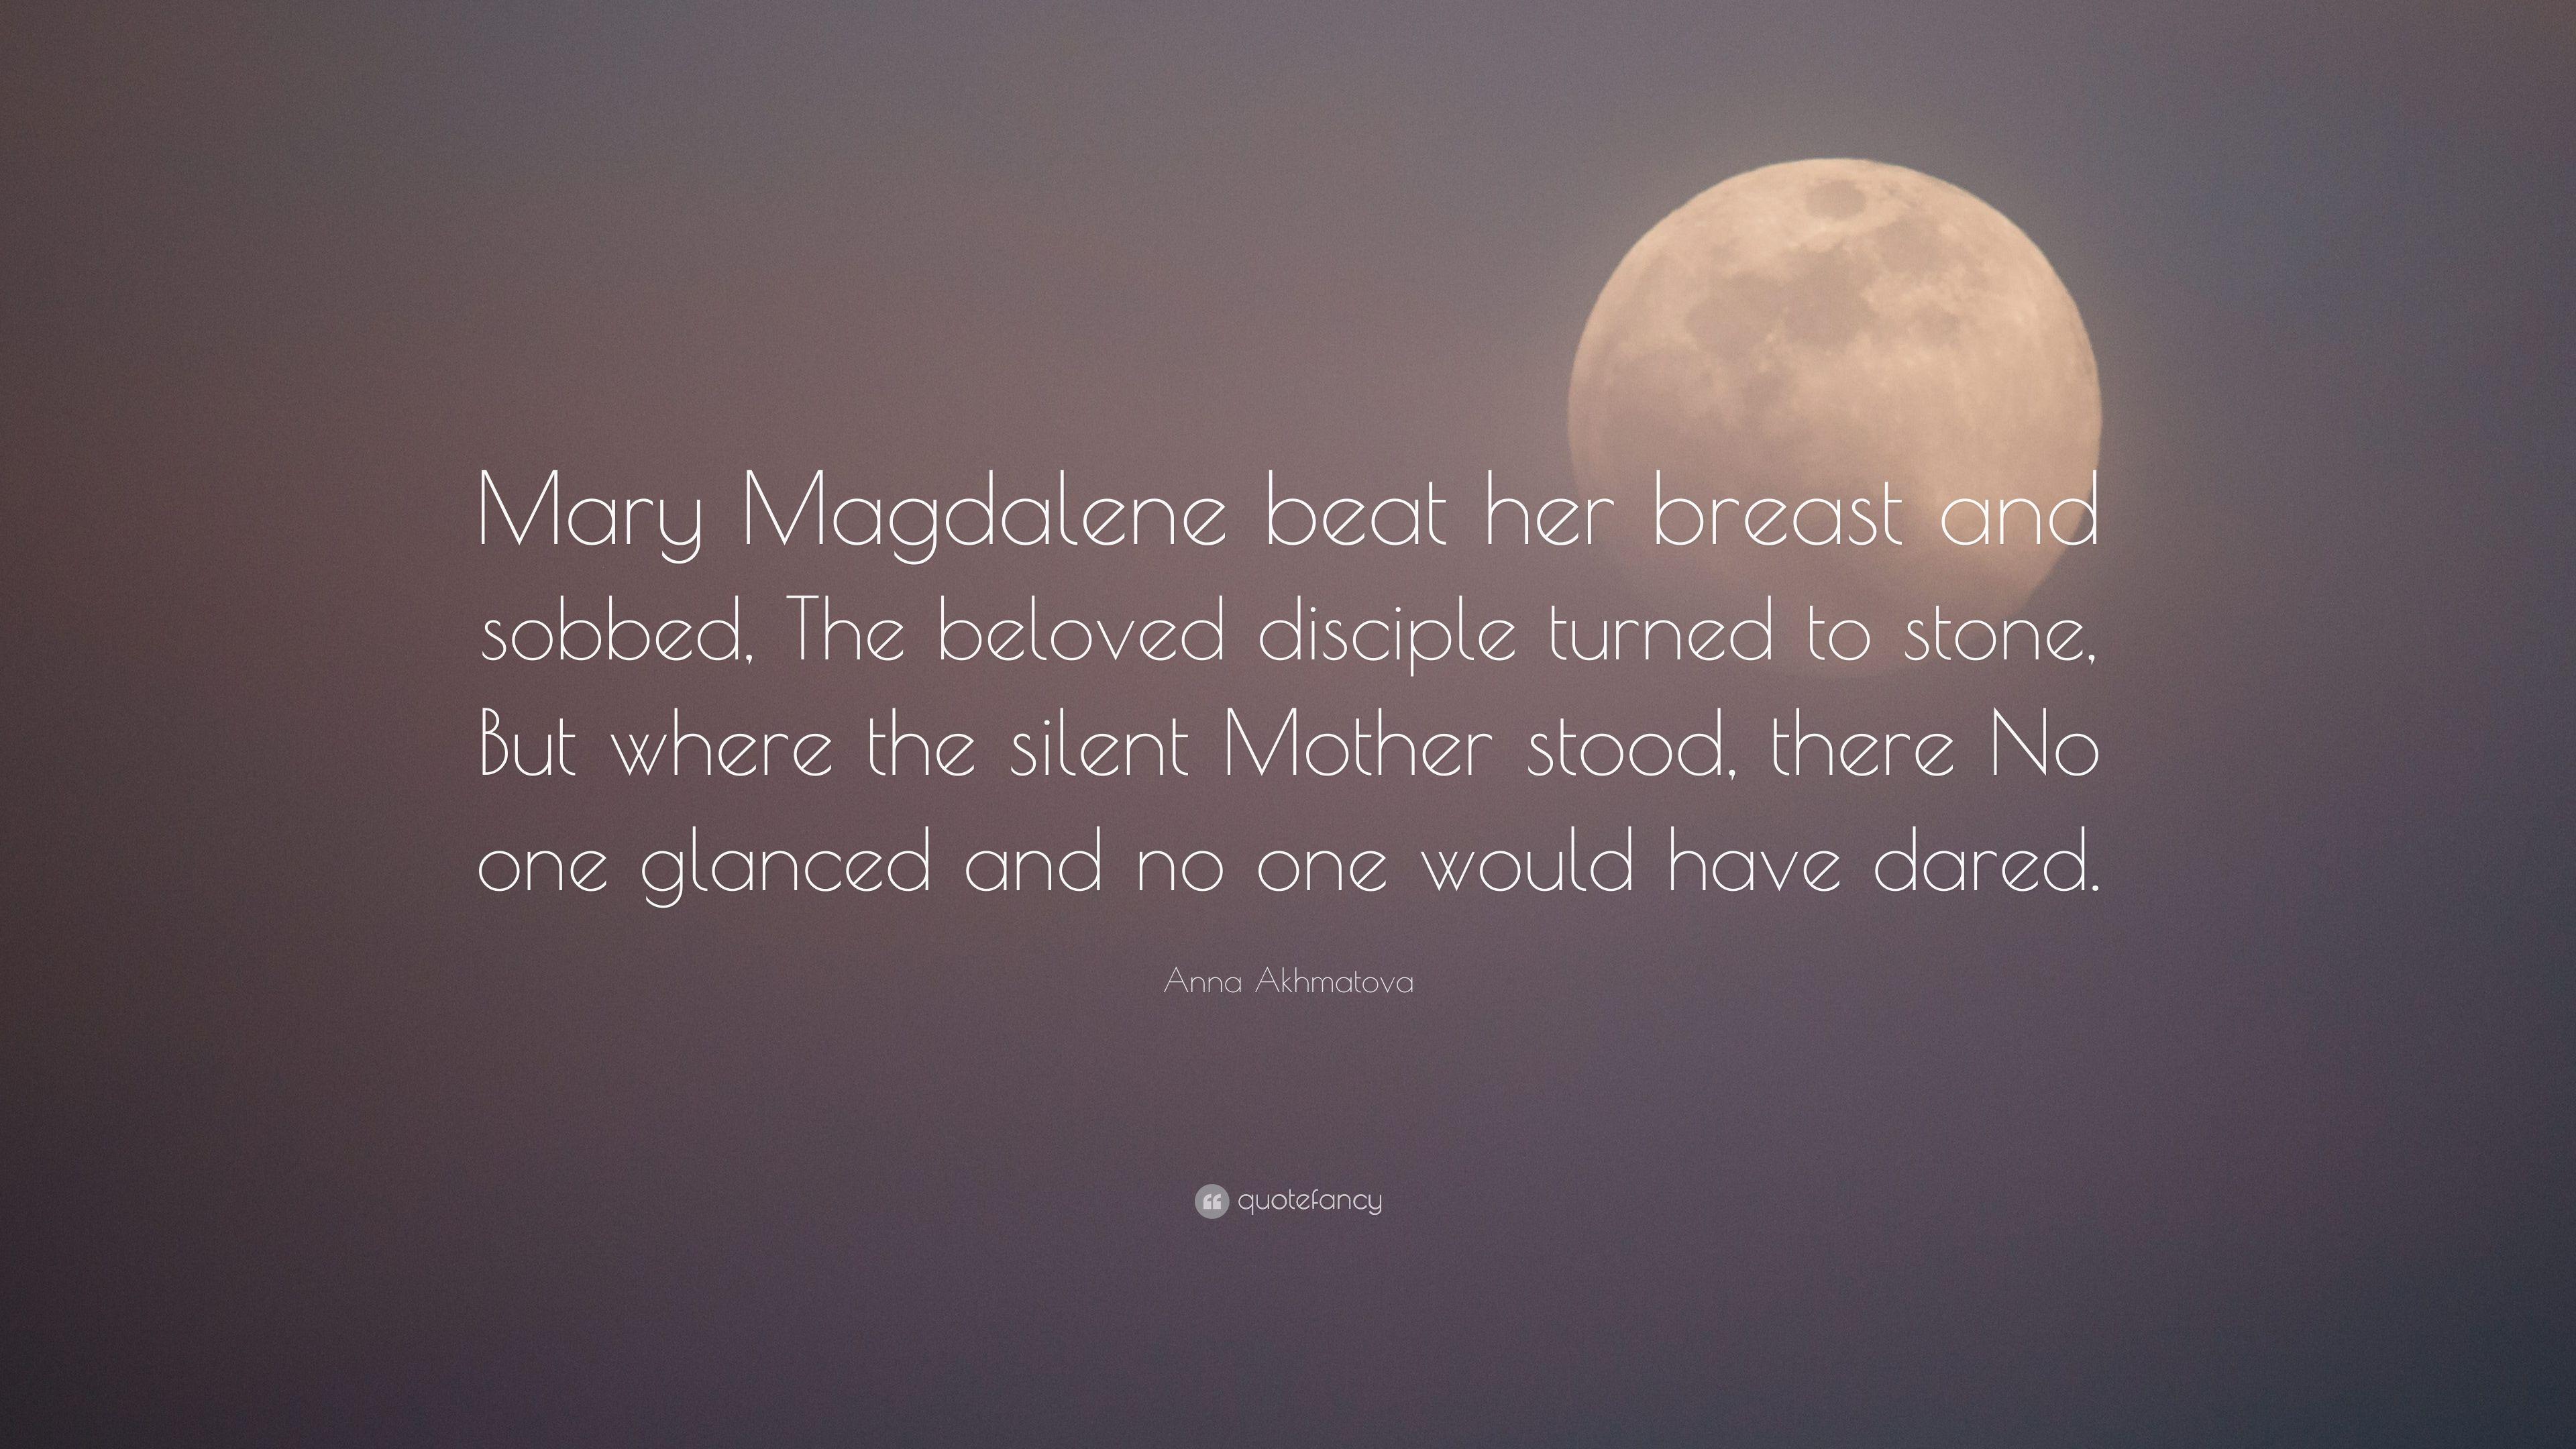 Anna Akhmatova Quote: “Mary Magdalene beat her breast and sobbed